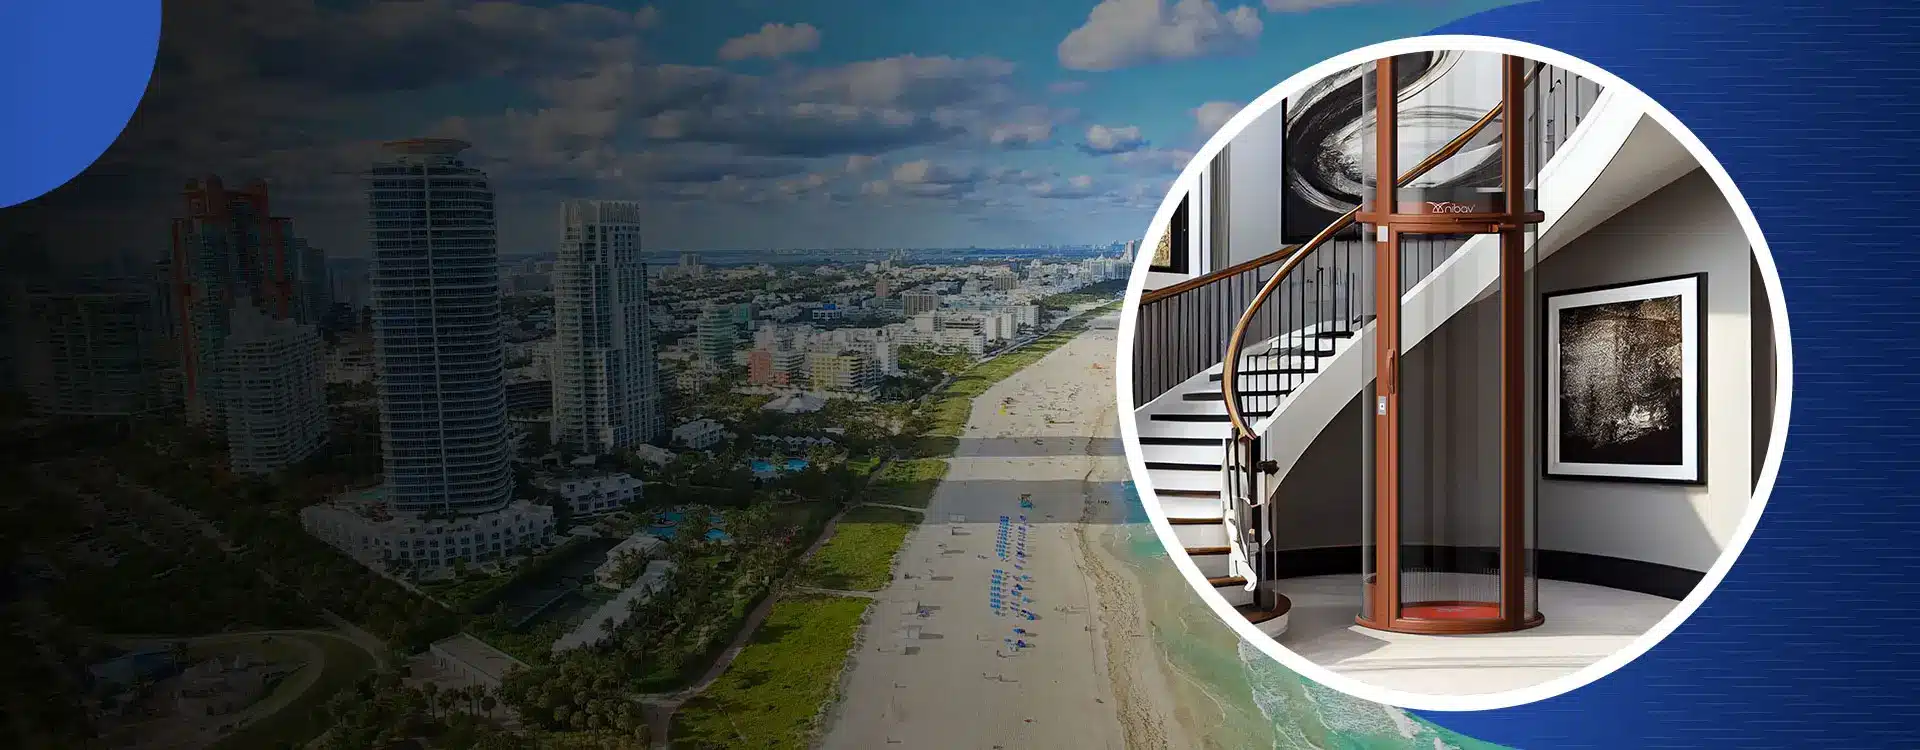 Domestic Lifts in Miami - Nibav Lifts USA